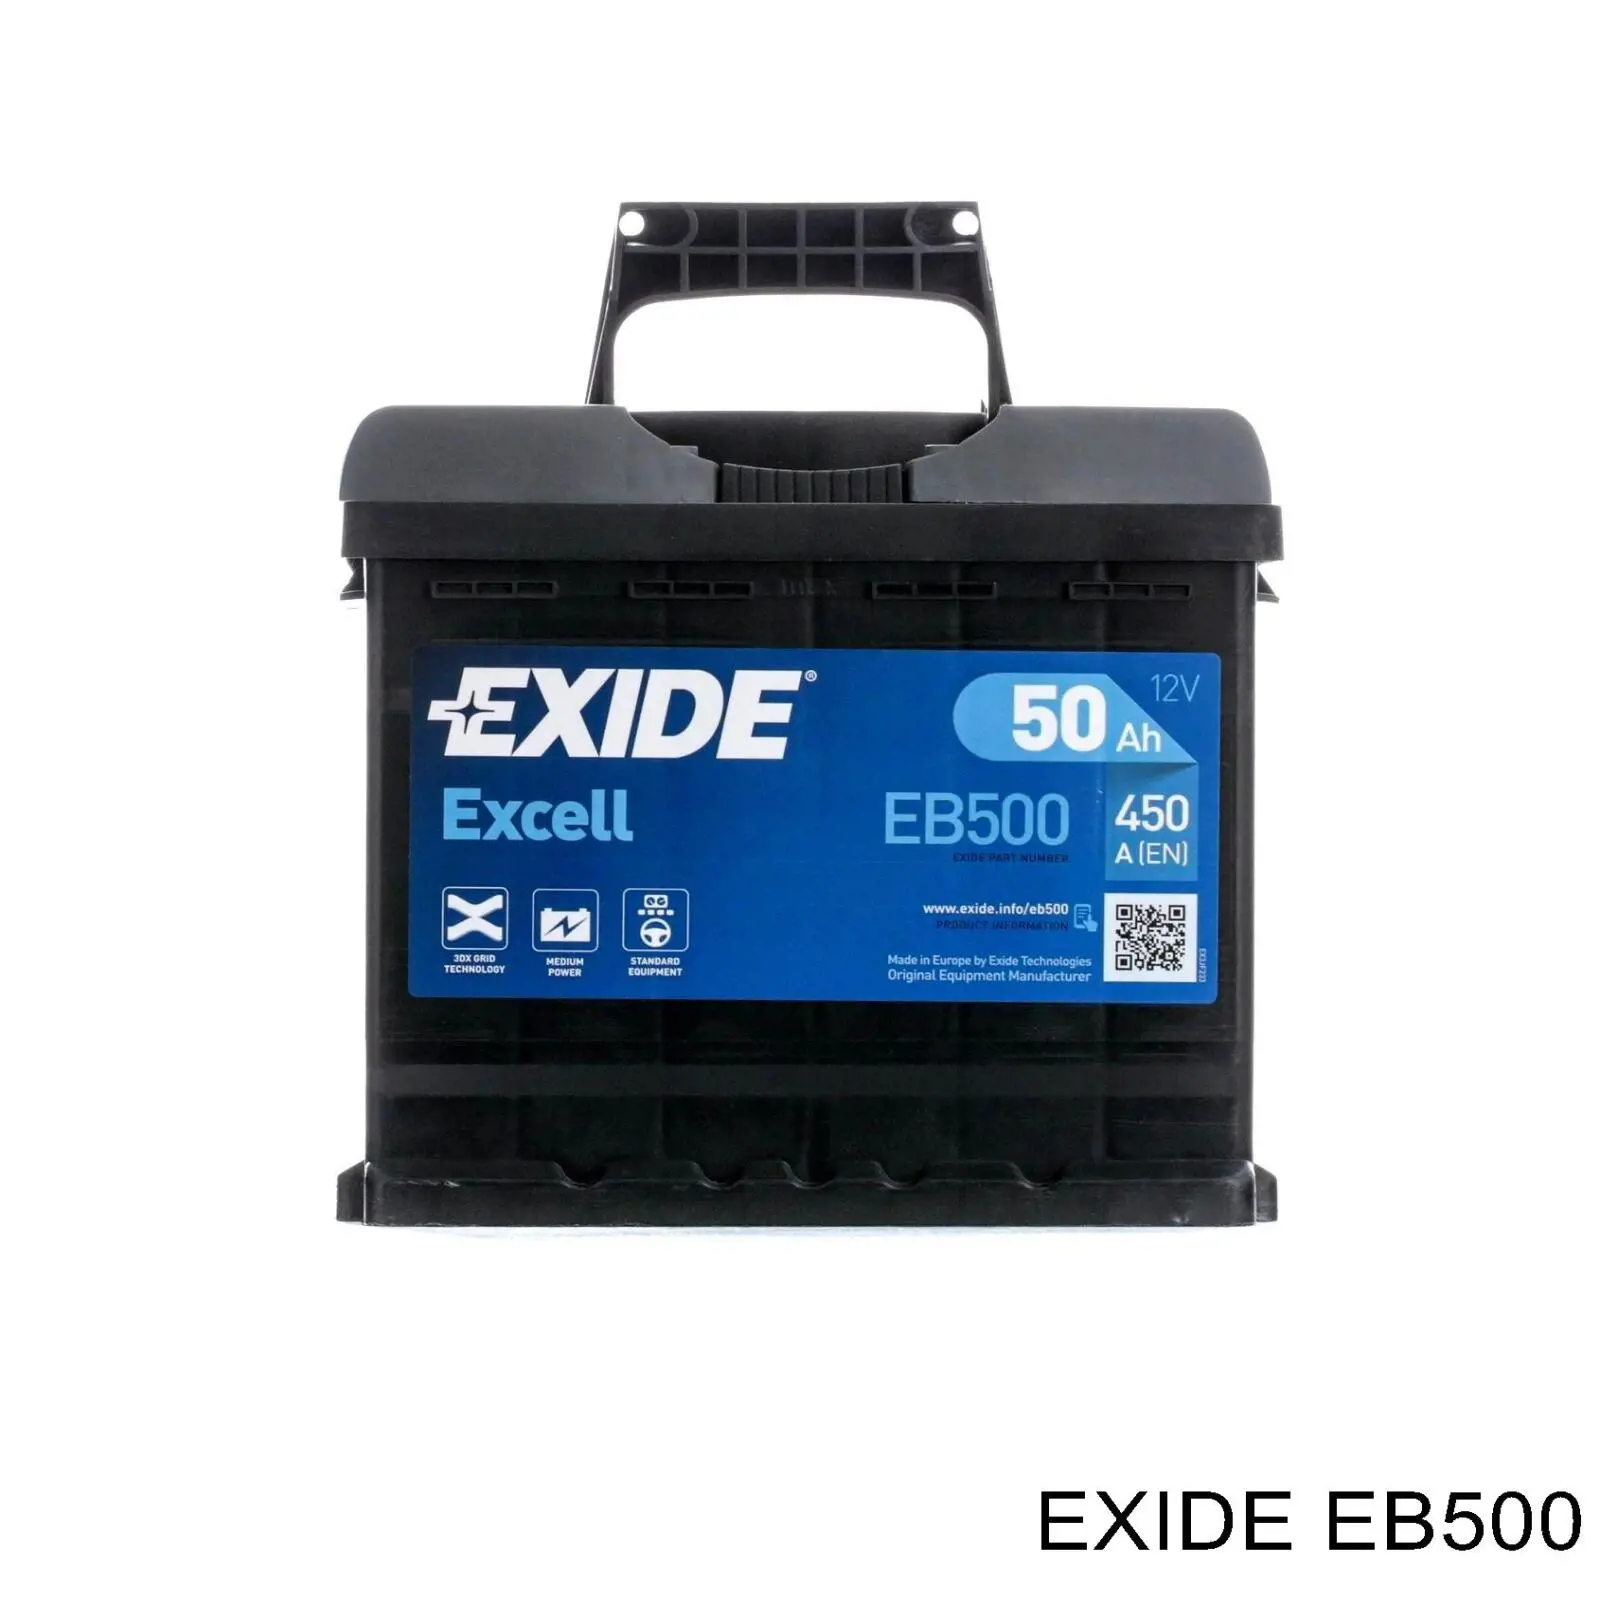 Batería de Arranque Exide Excell 50 ah 12 v B13 (EB500)